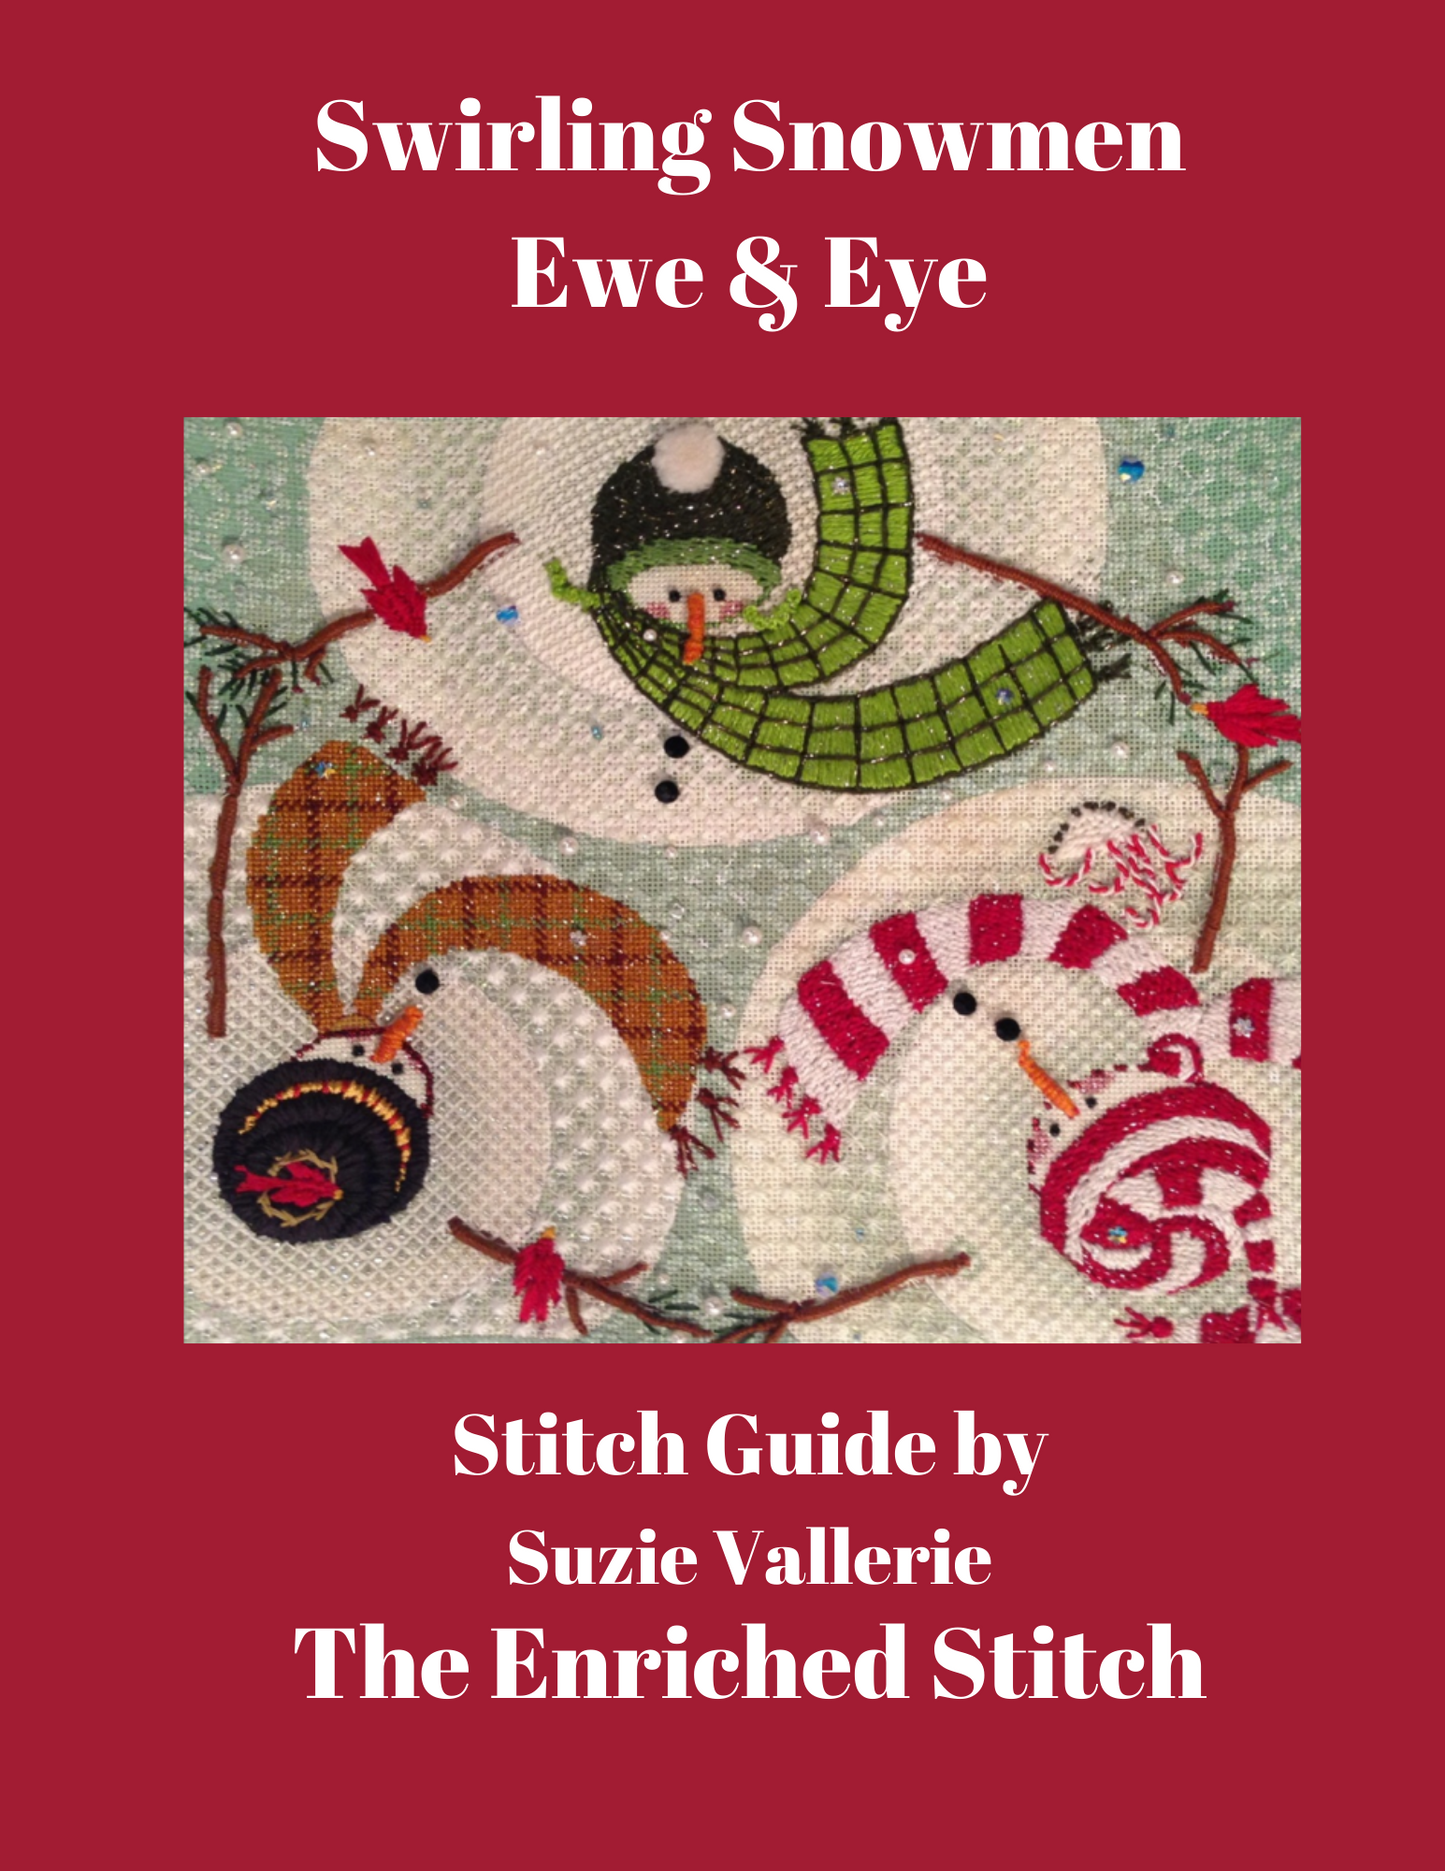 Swirling Snowmen Stitch Guide